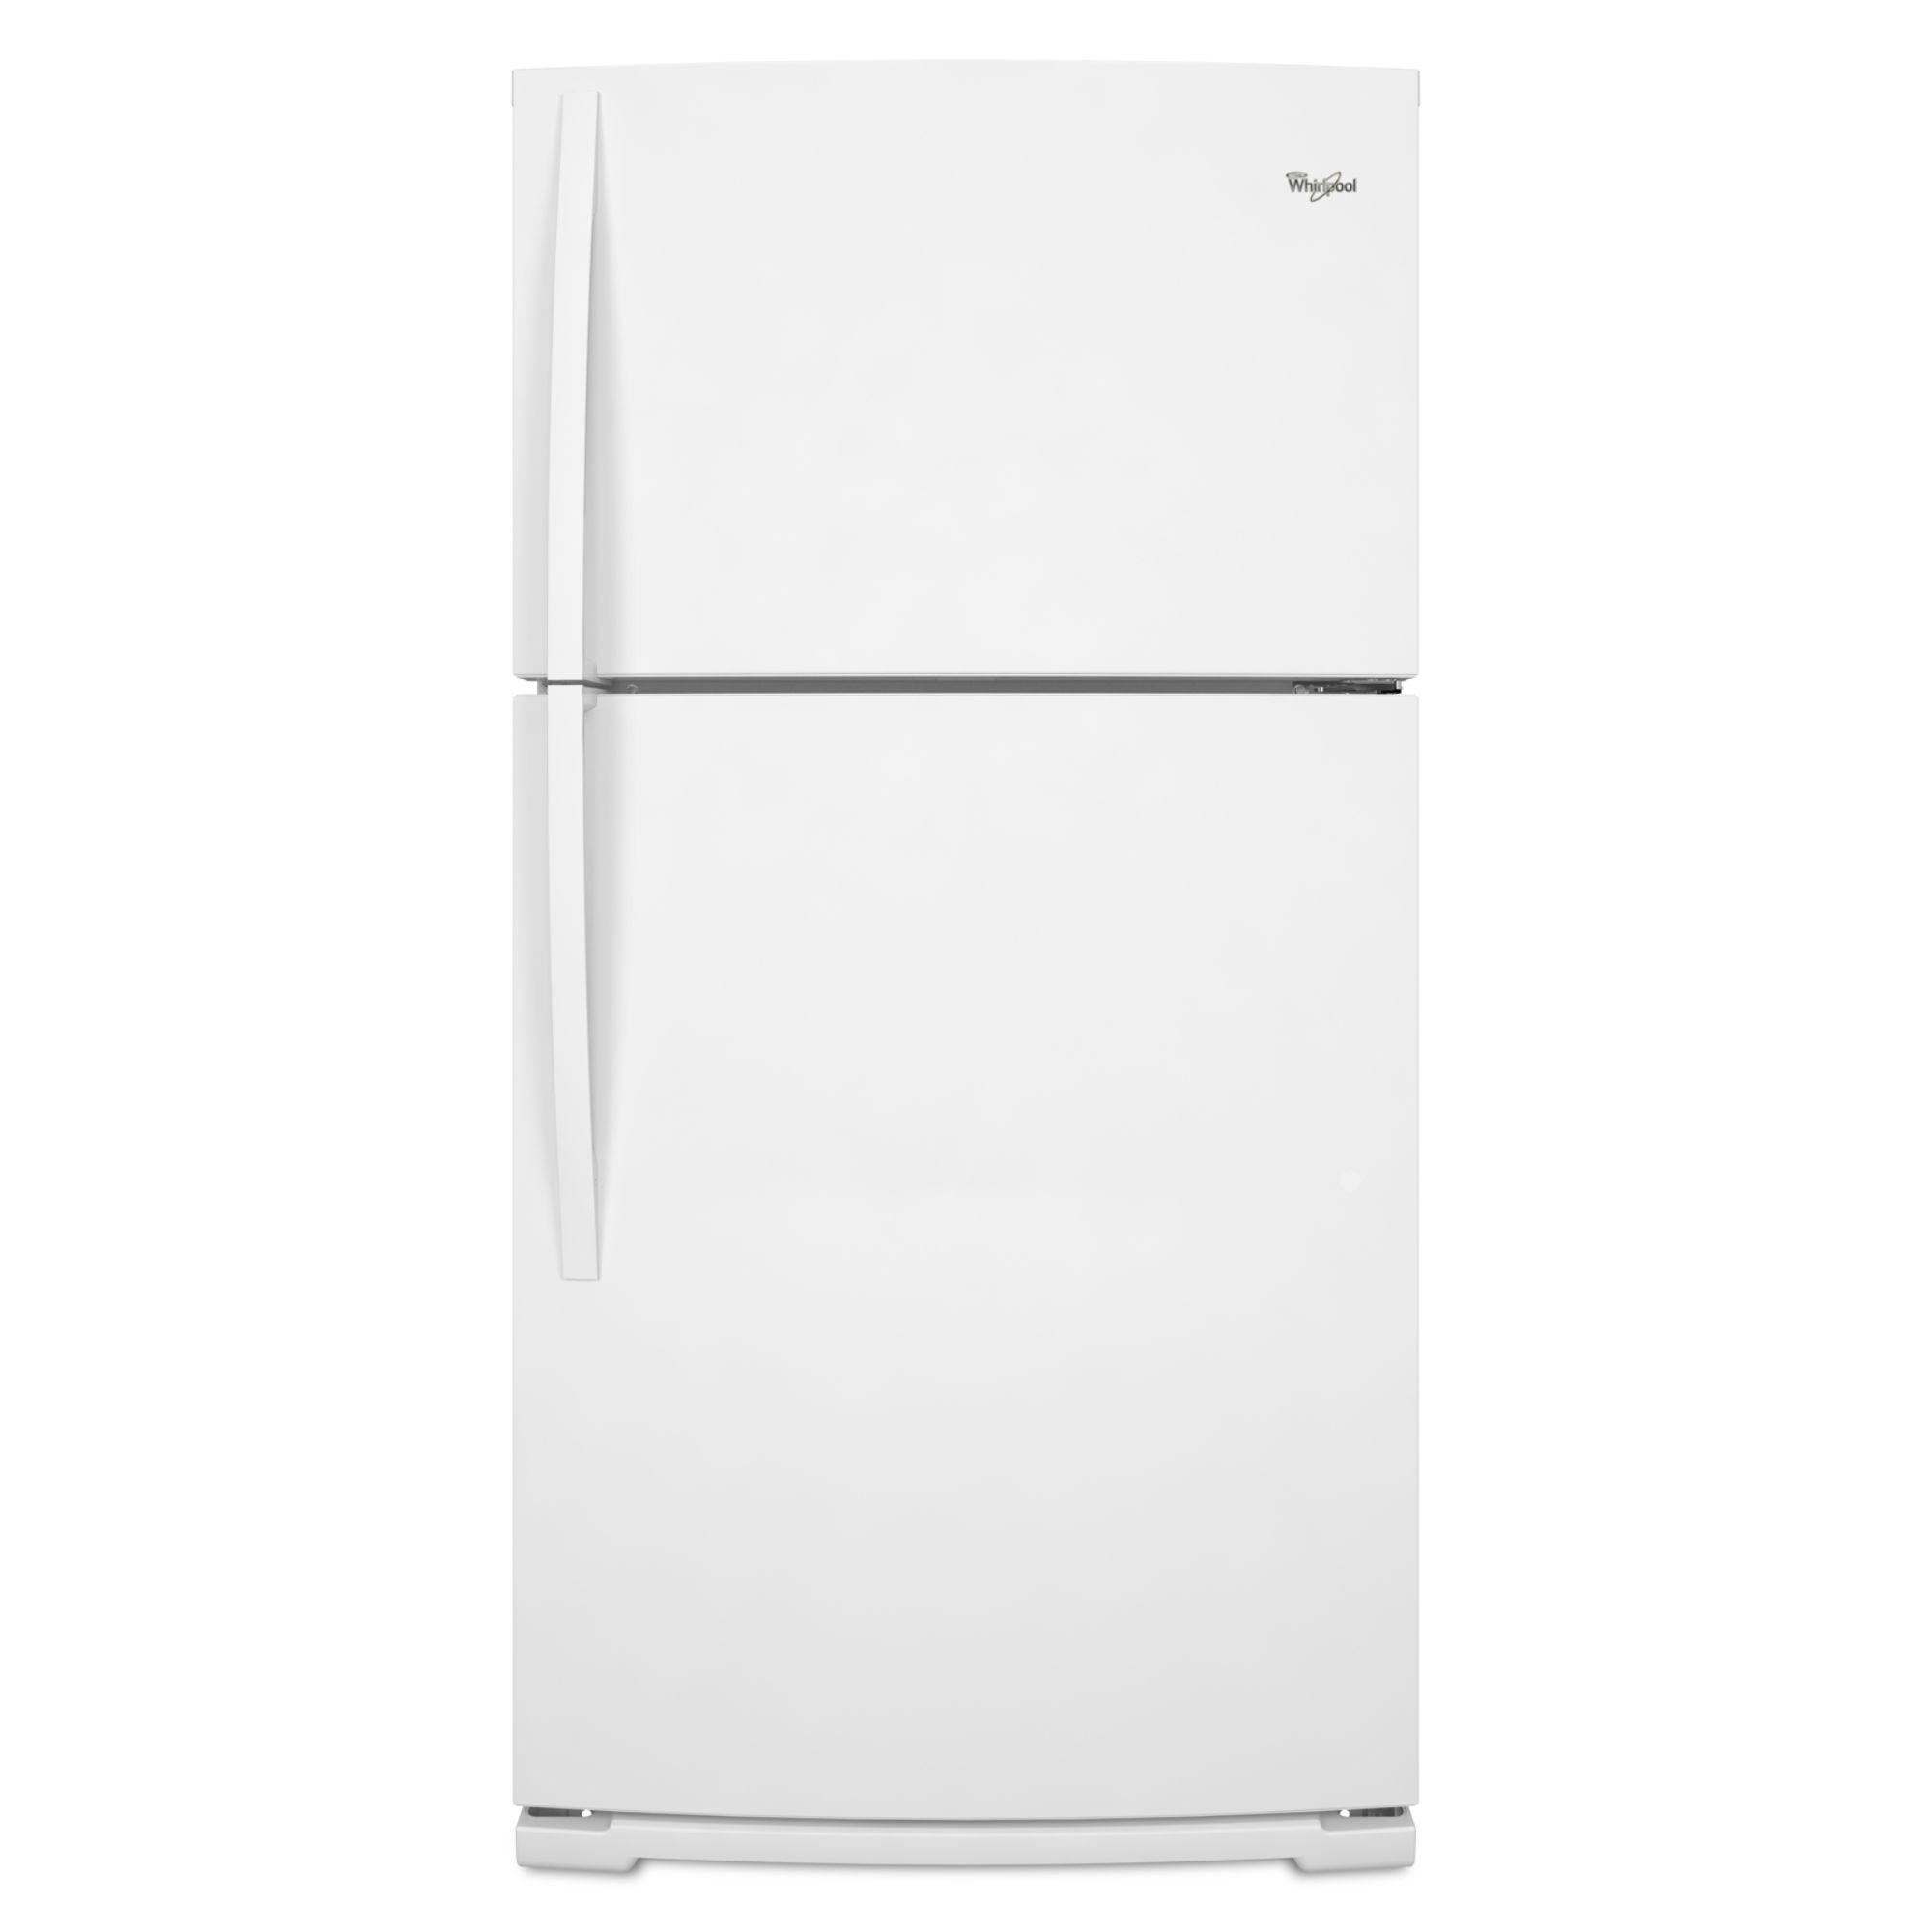 Whirlpool 20.6 cu. ft. Top-Freezer Refrigerator w/ Condiment Caddy - White